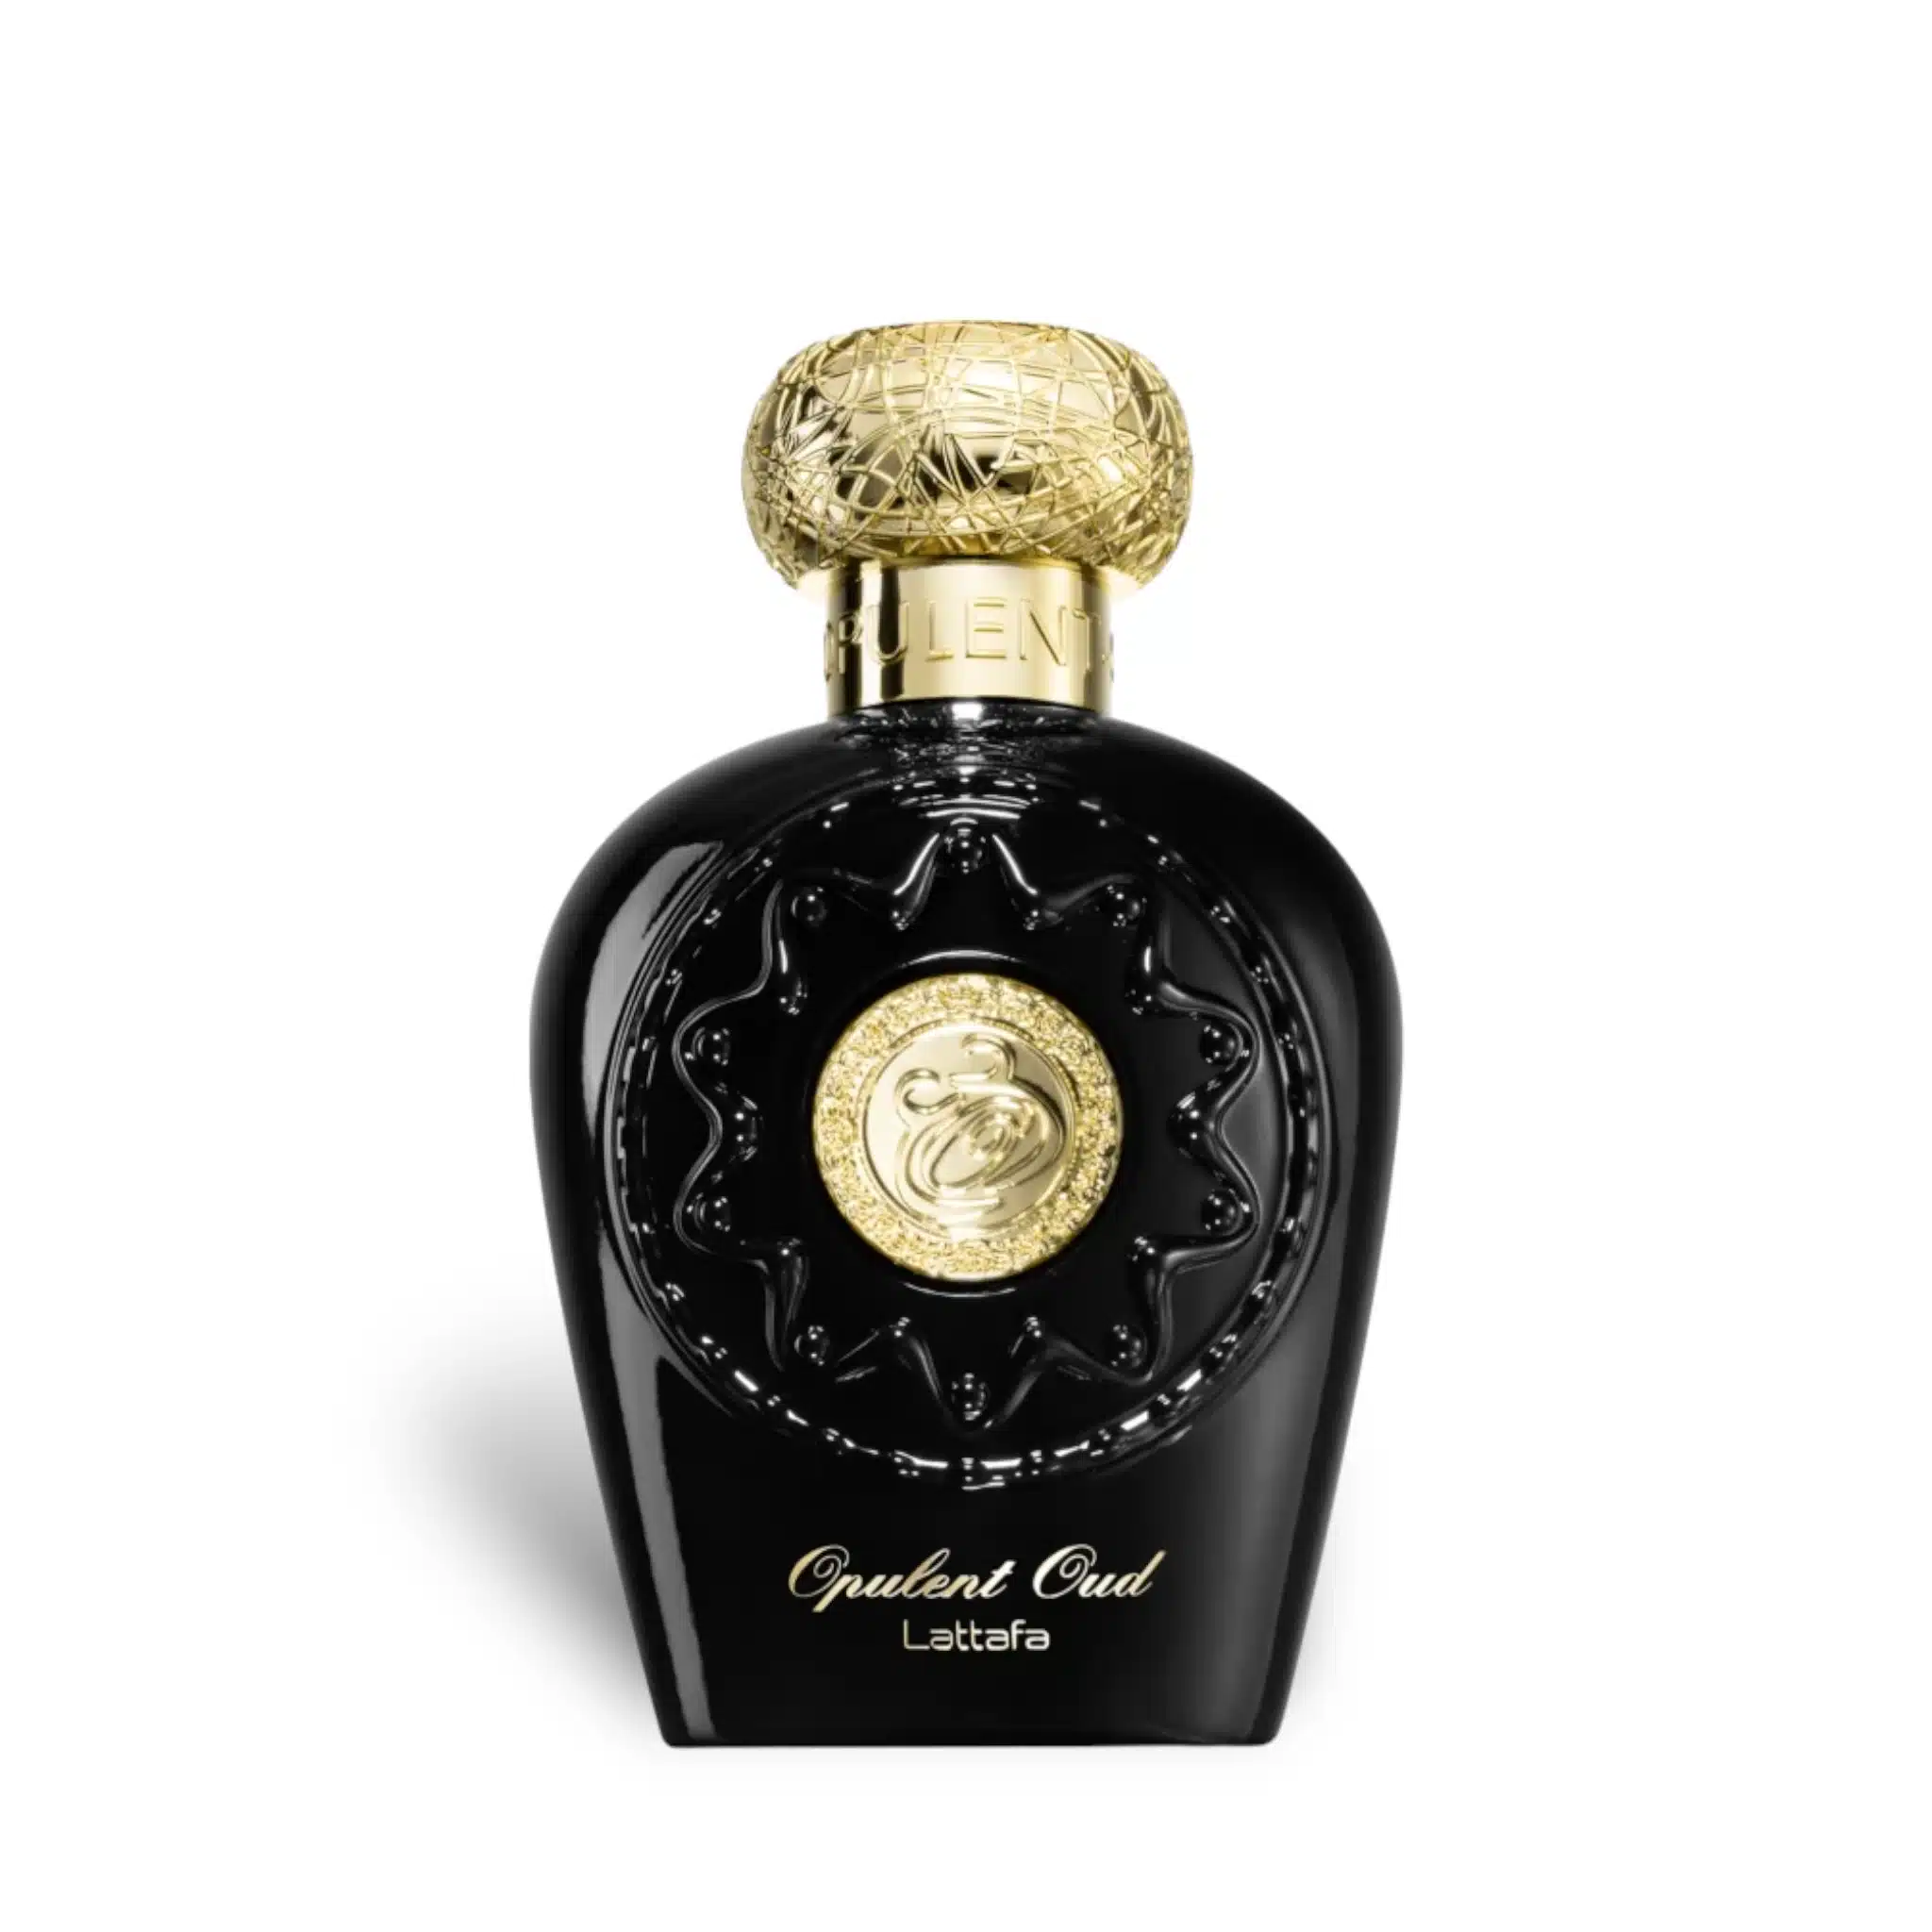 Opulent Oud Perfume Eau De Parfum 100Ml Edp By Lattafa